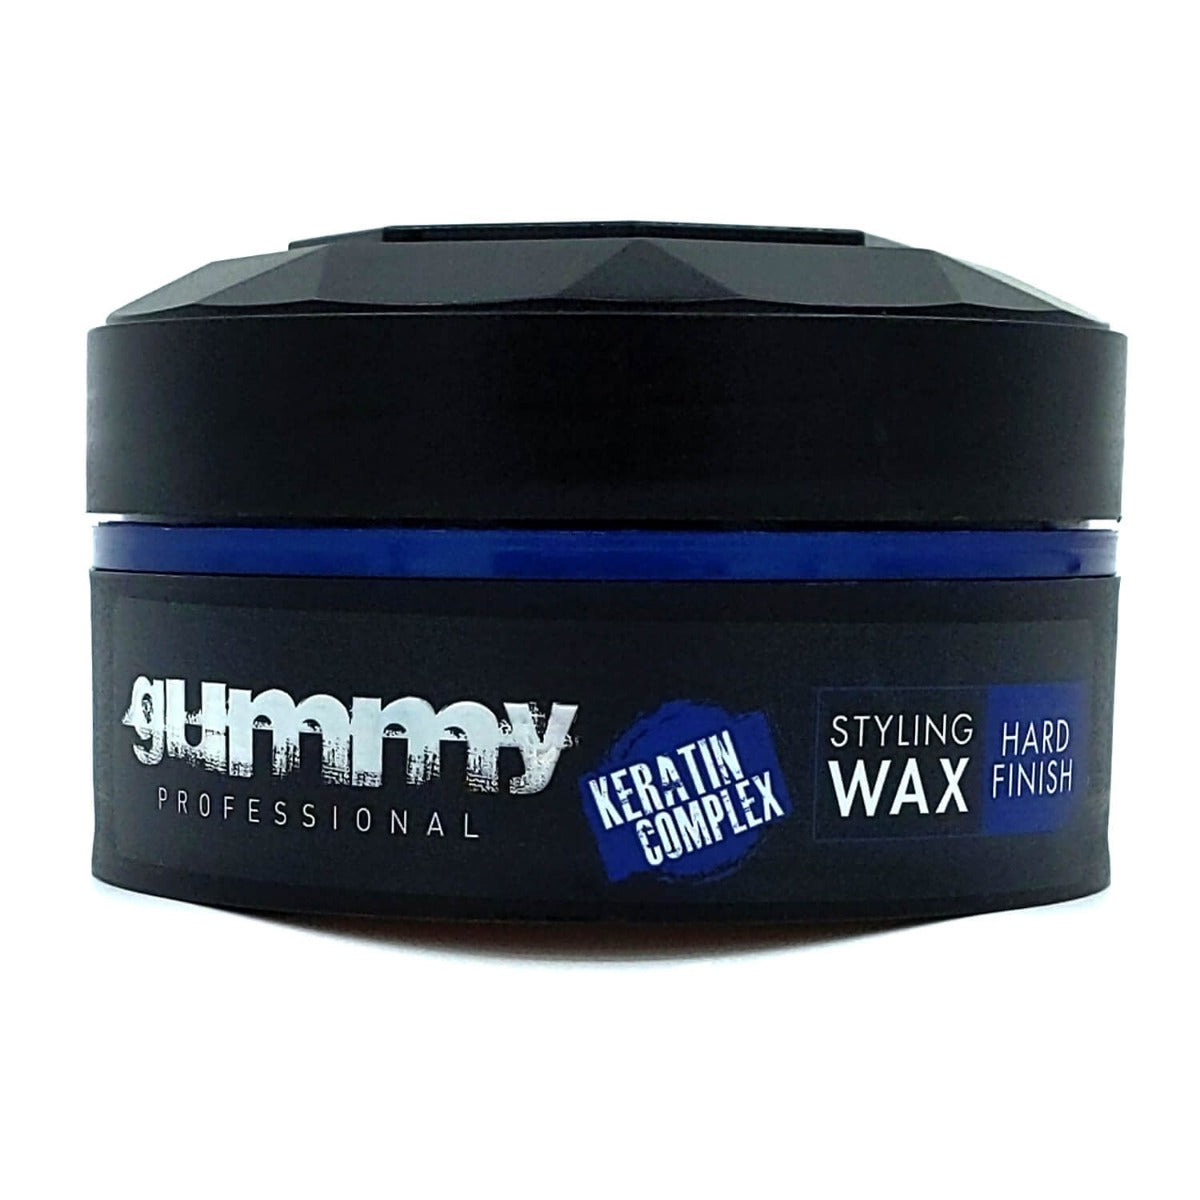 Gummy Professional Styling Wax Hard Finish - 150ml